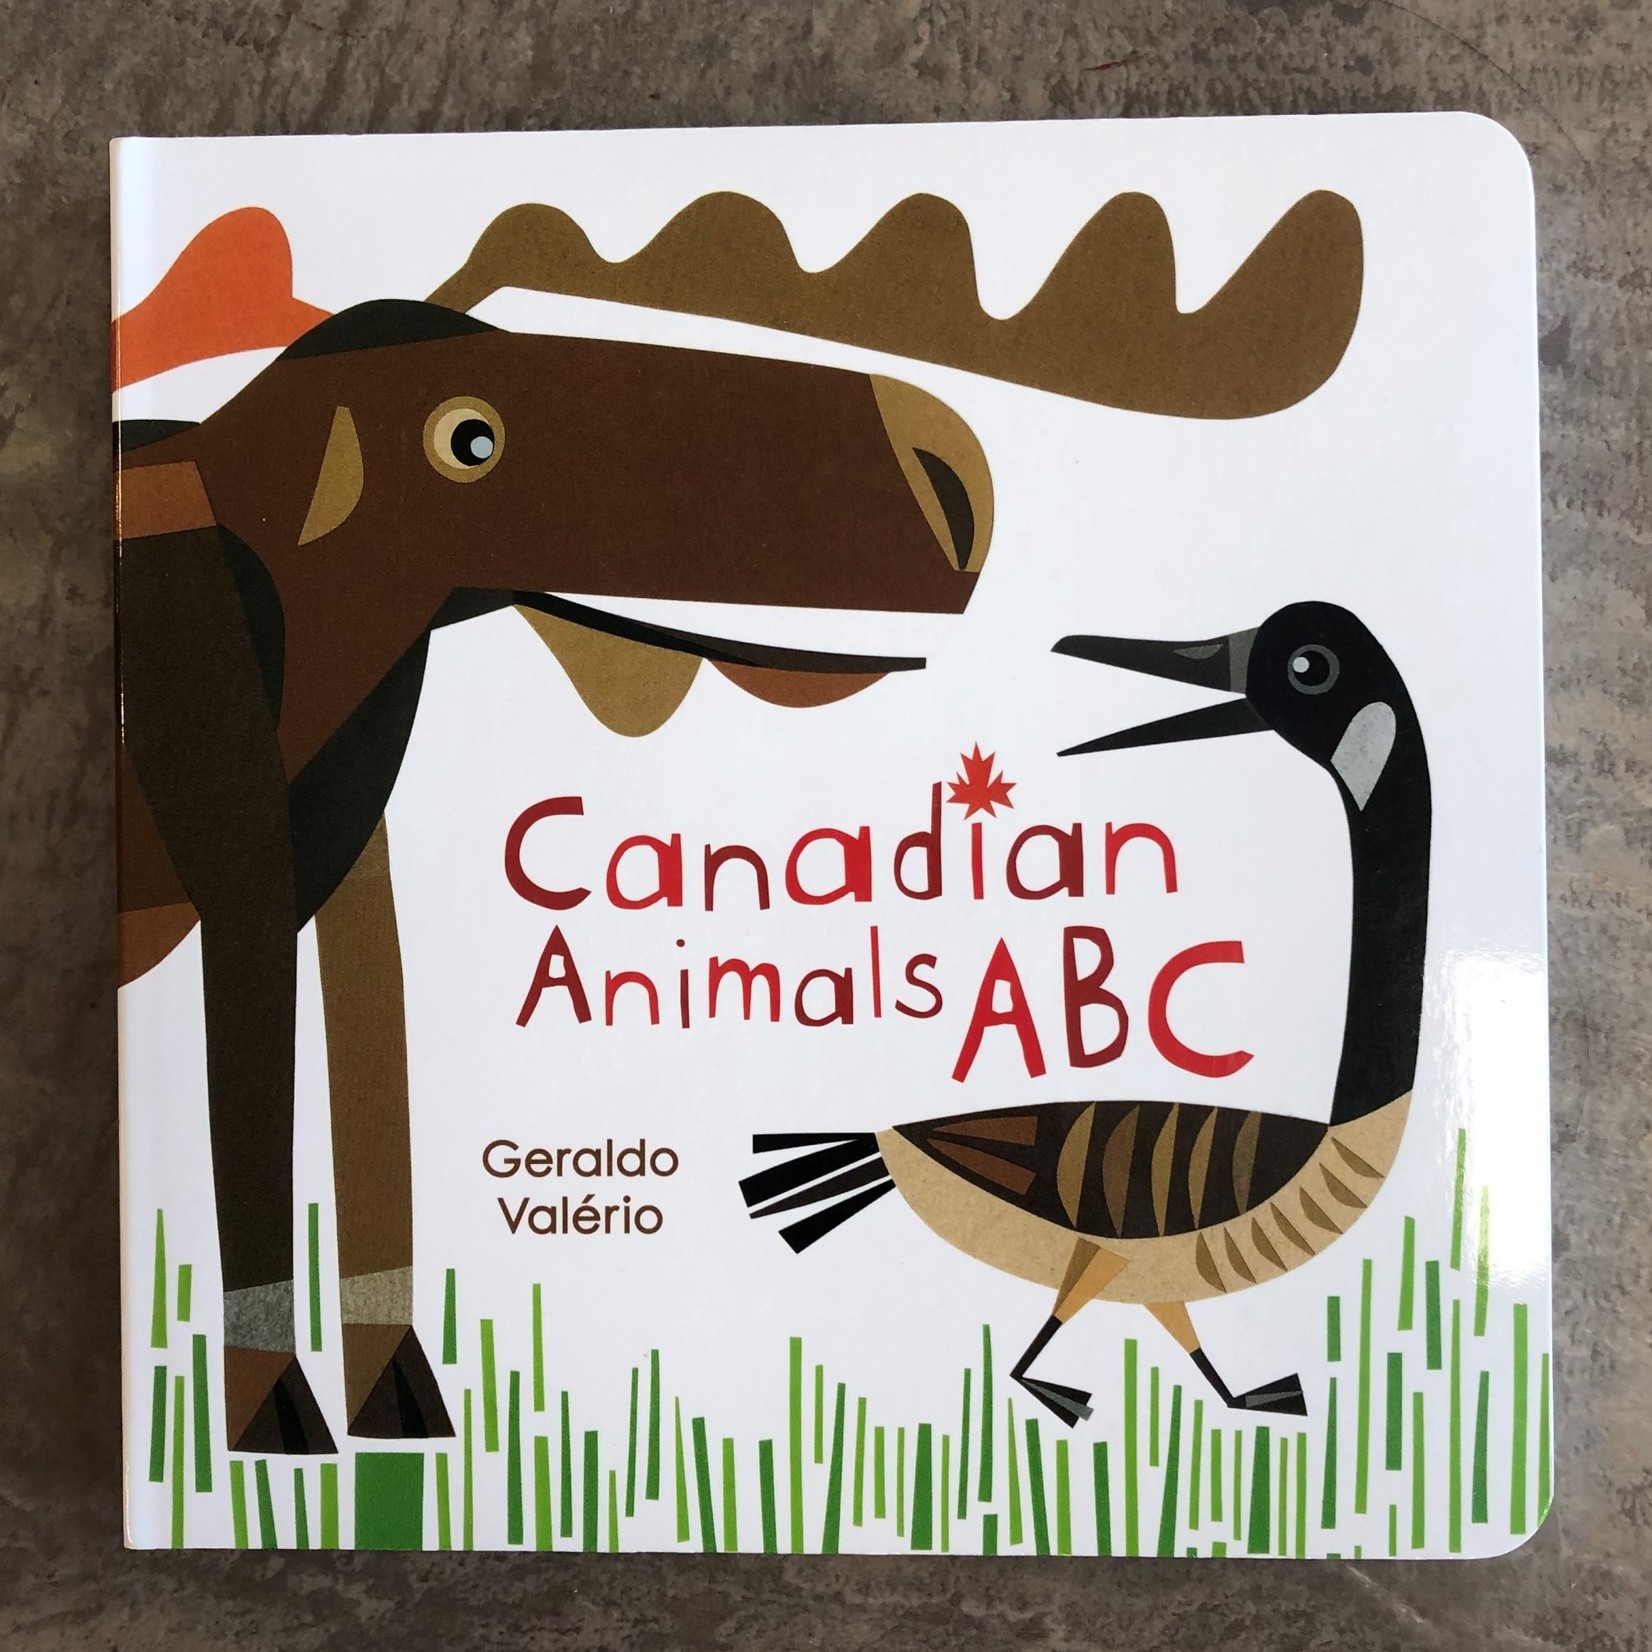 Canadian Animals ABC